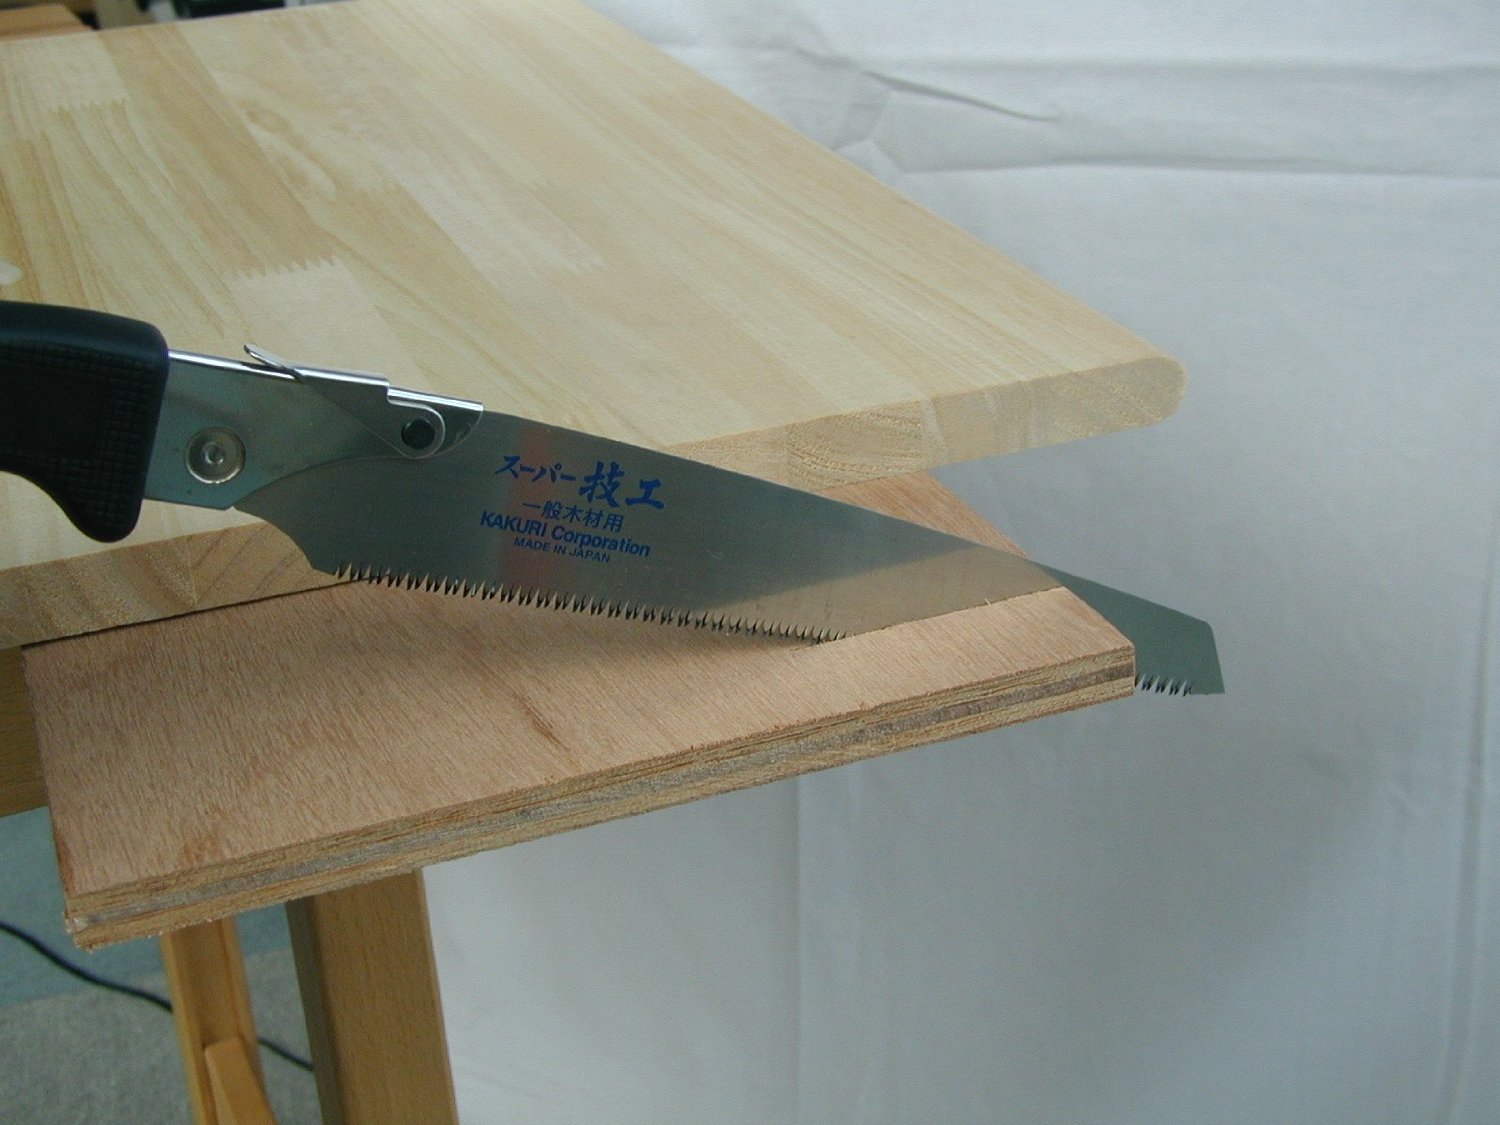 KAKURI スーパー技工 替刃式鋸 210mm 本体 一般木材用 プラケース入 | 角利産業 株式会社